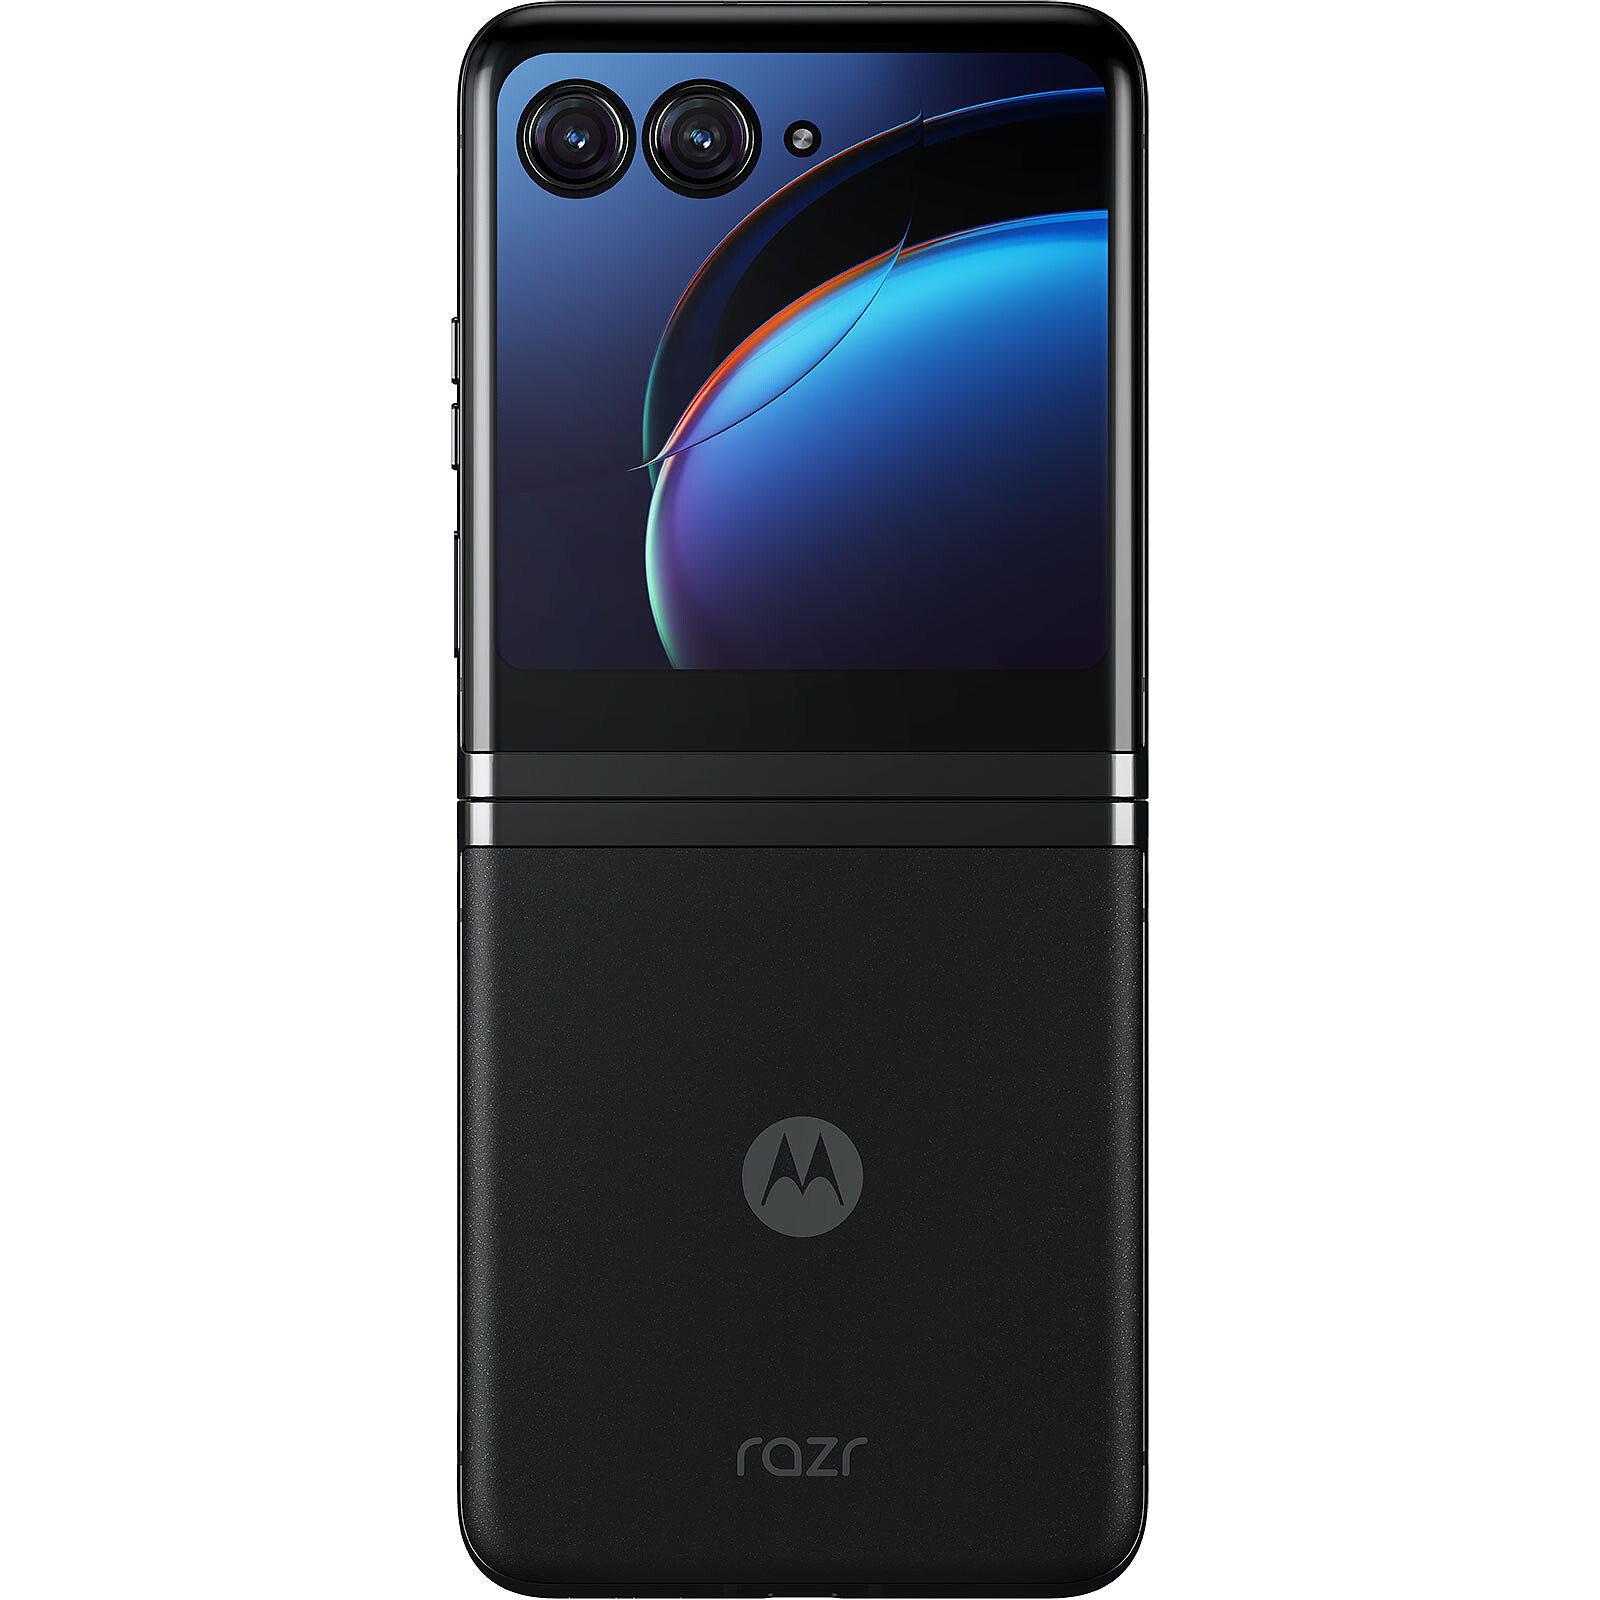 Motorola Razr 40 ultra: Snapdragon 8 Gen 1 + 12GB ram